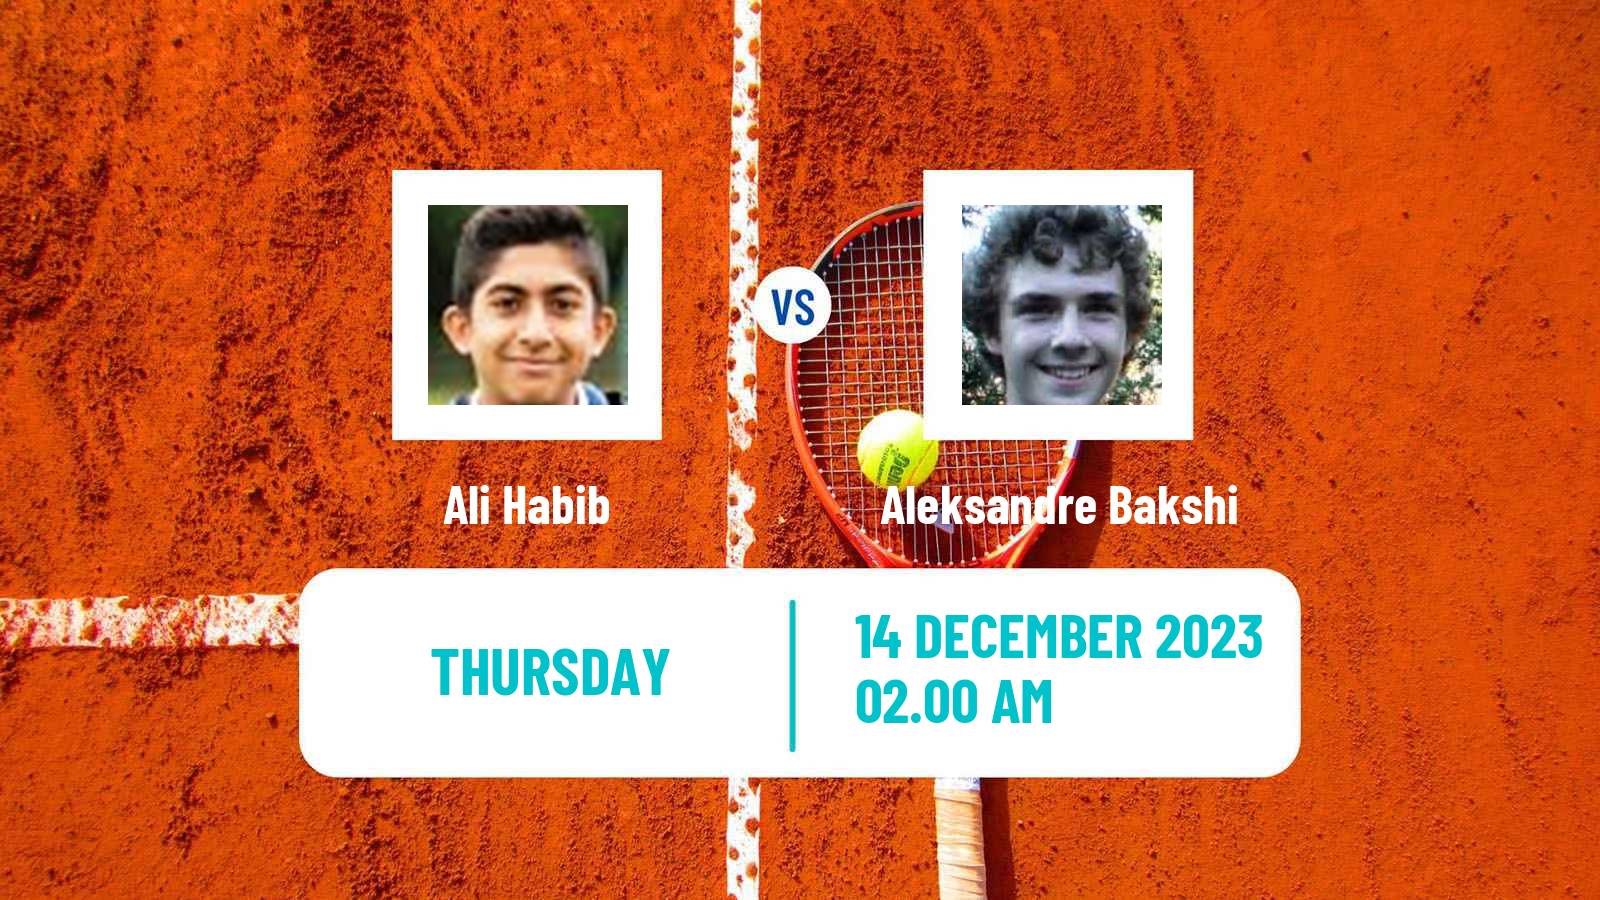 Tennis ITF M15 Zahra 3 Men Ali Habib - Aleksandre Bakshi